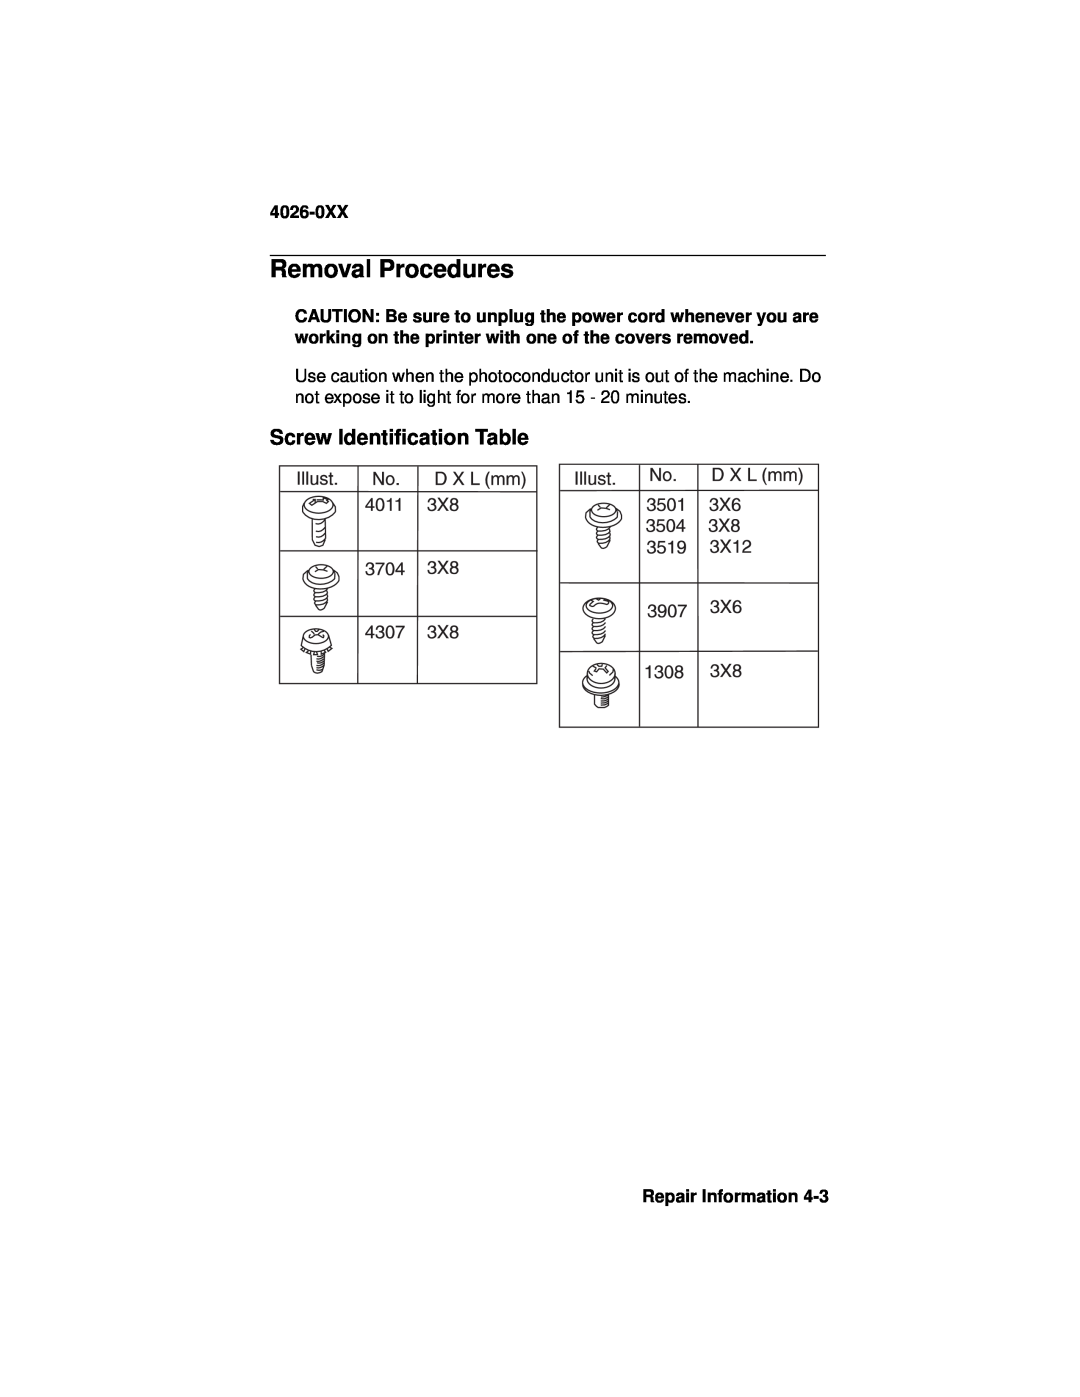 Lexmark OptraTM manual Removal Procedures, Screw Identification Table, 4026-0XX, Repair Information 